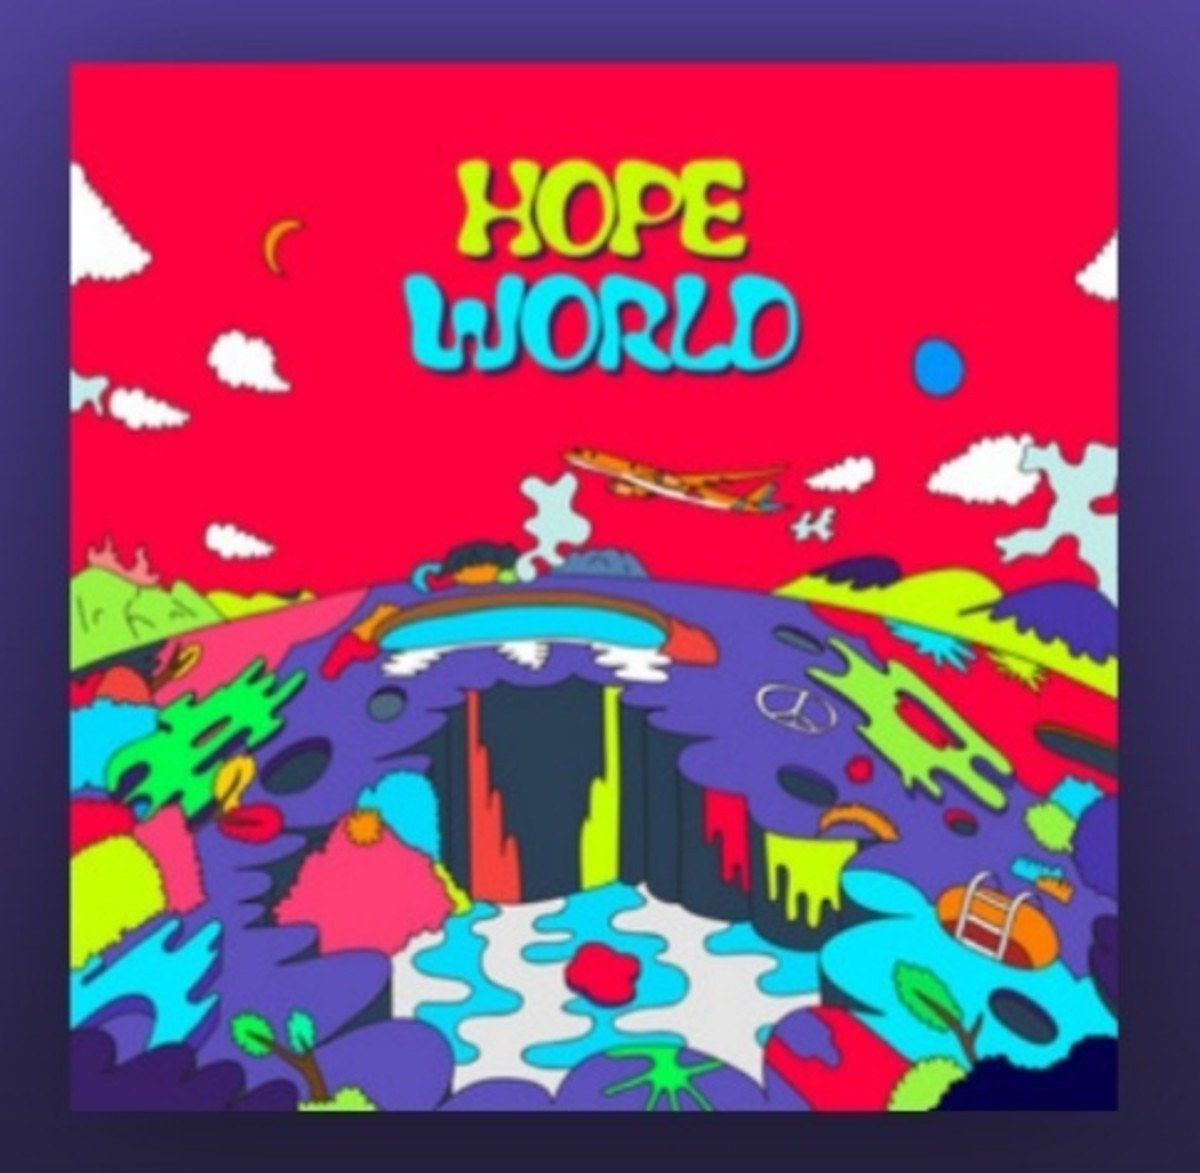 hope-world-mixtape-the-sunshine-that-j-hope-brings